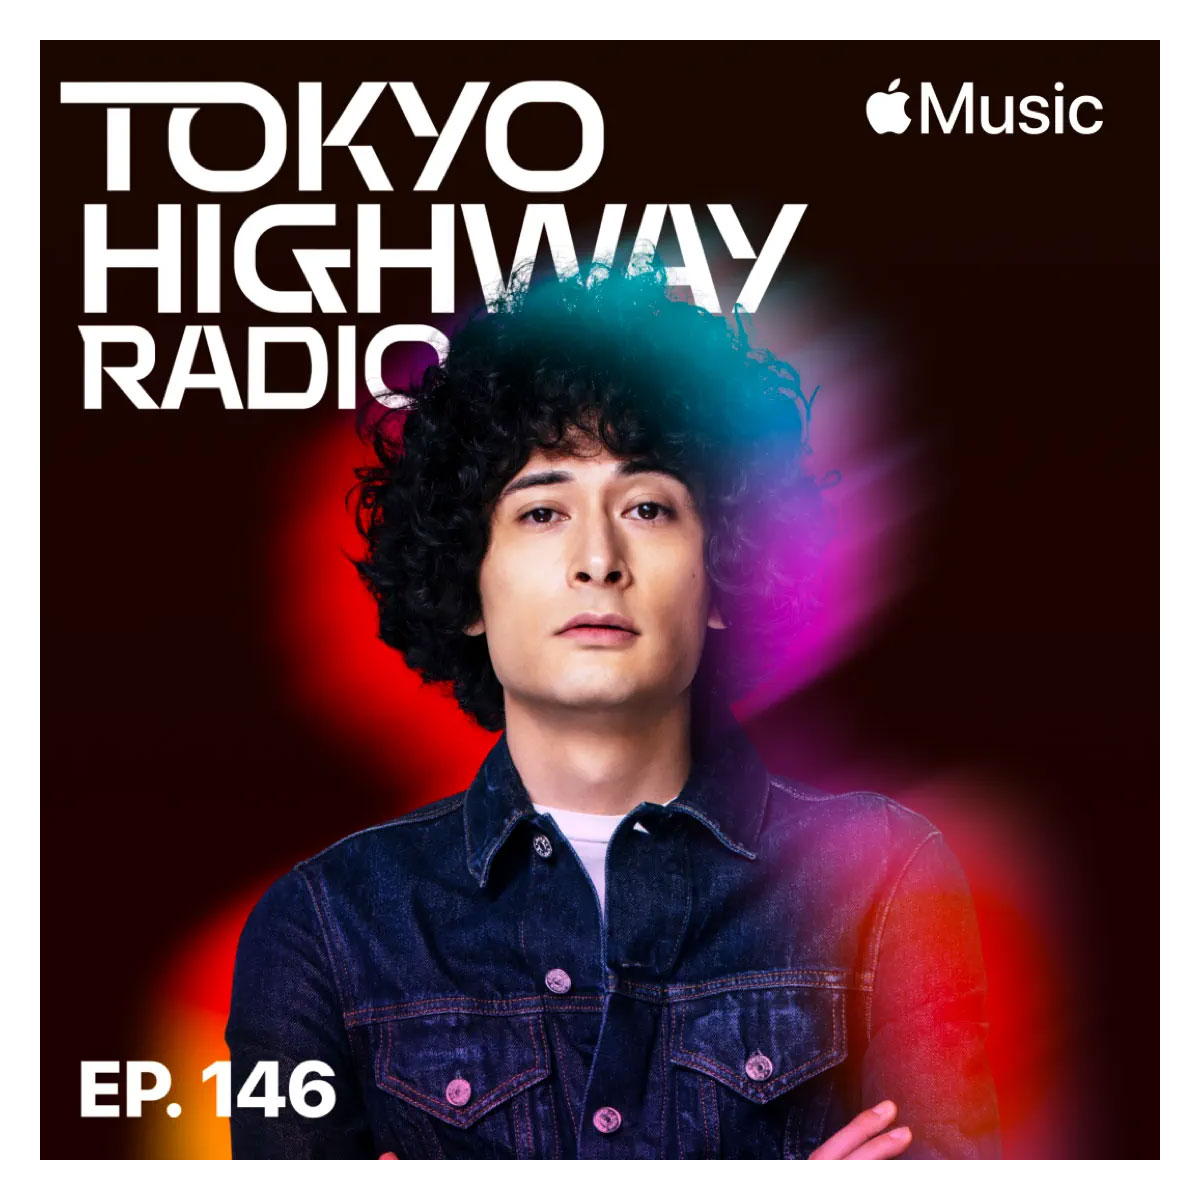 Tokyo Highway Radio with Mino ゲスト：tofubeats